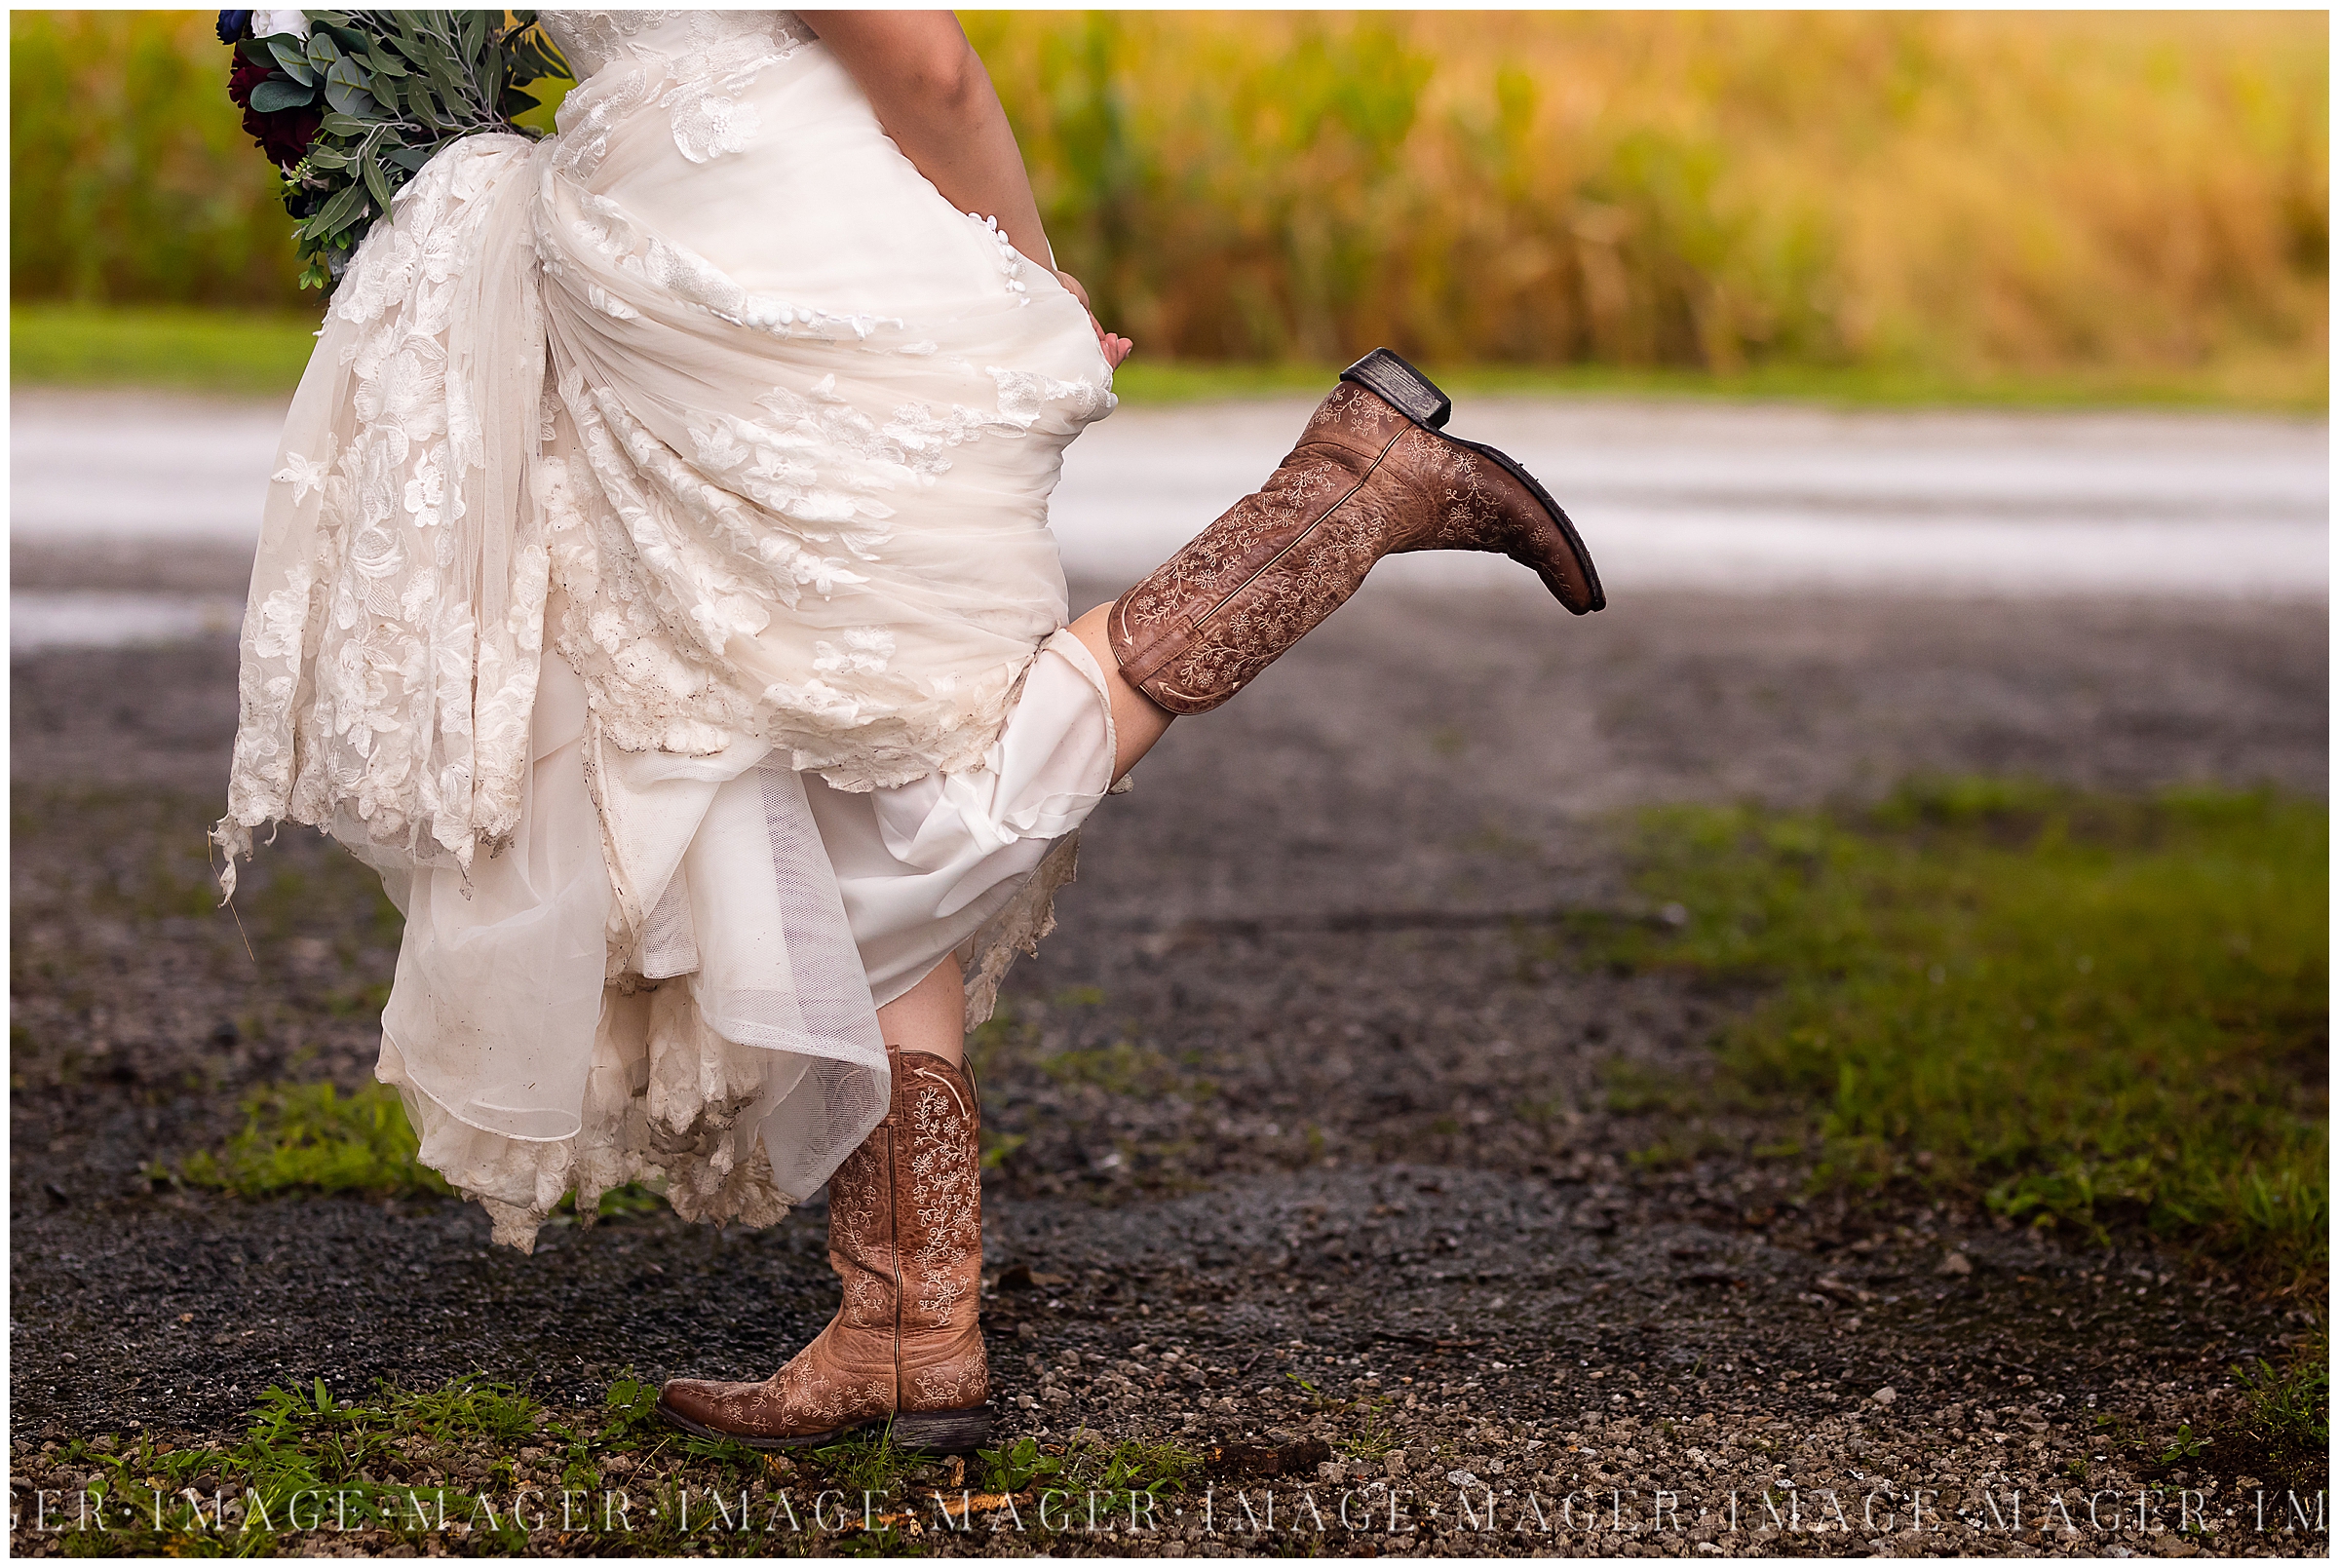 country-bride-dress-boots-muddy-rainy-wedding-day